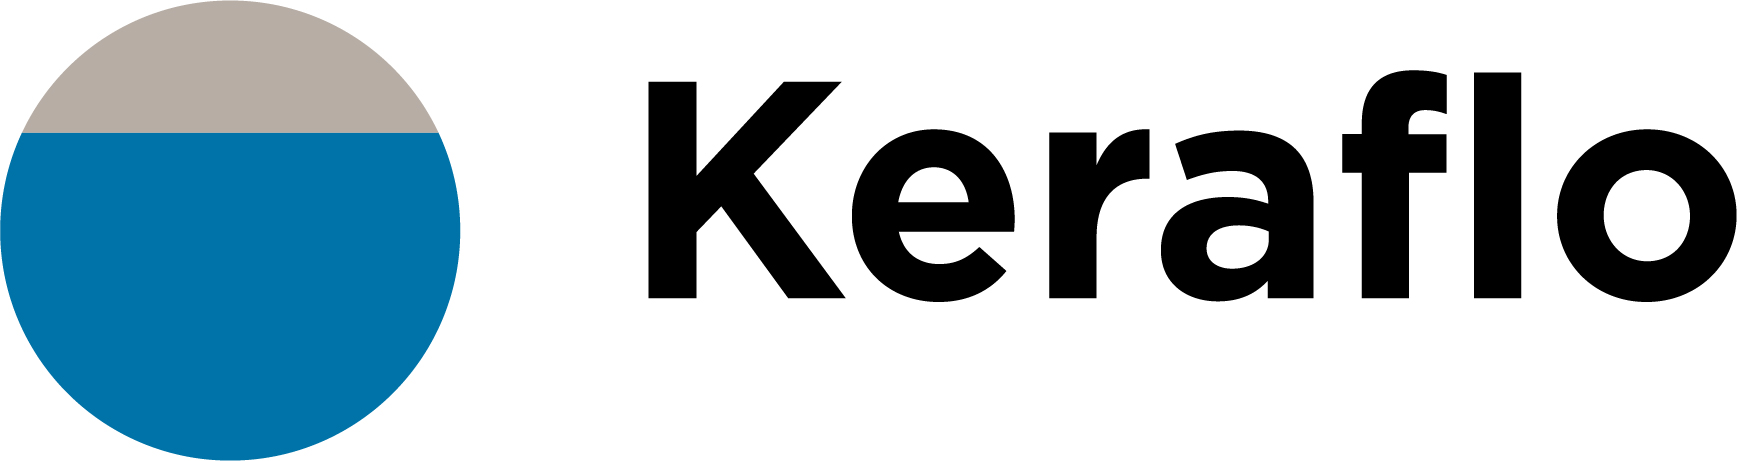 Keraflo logo